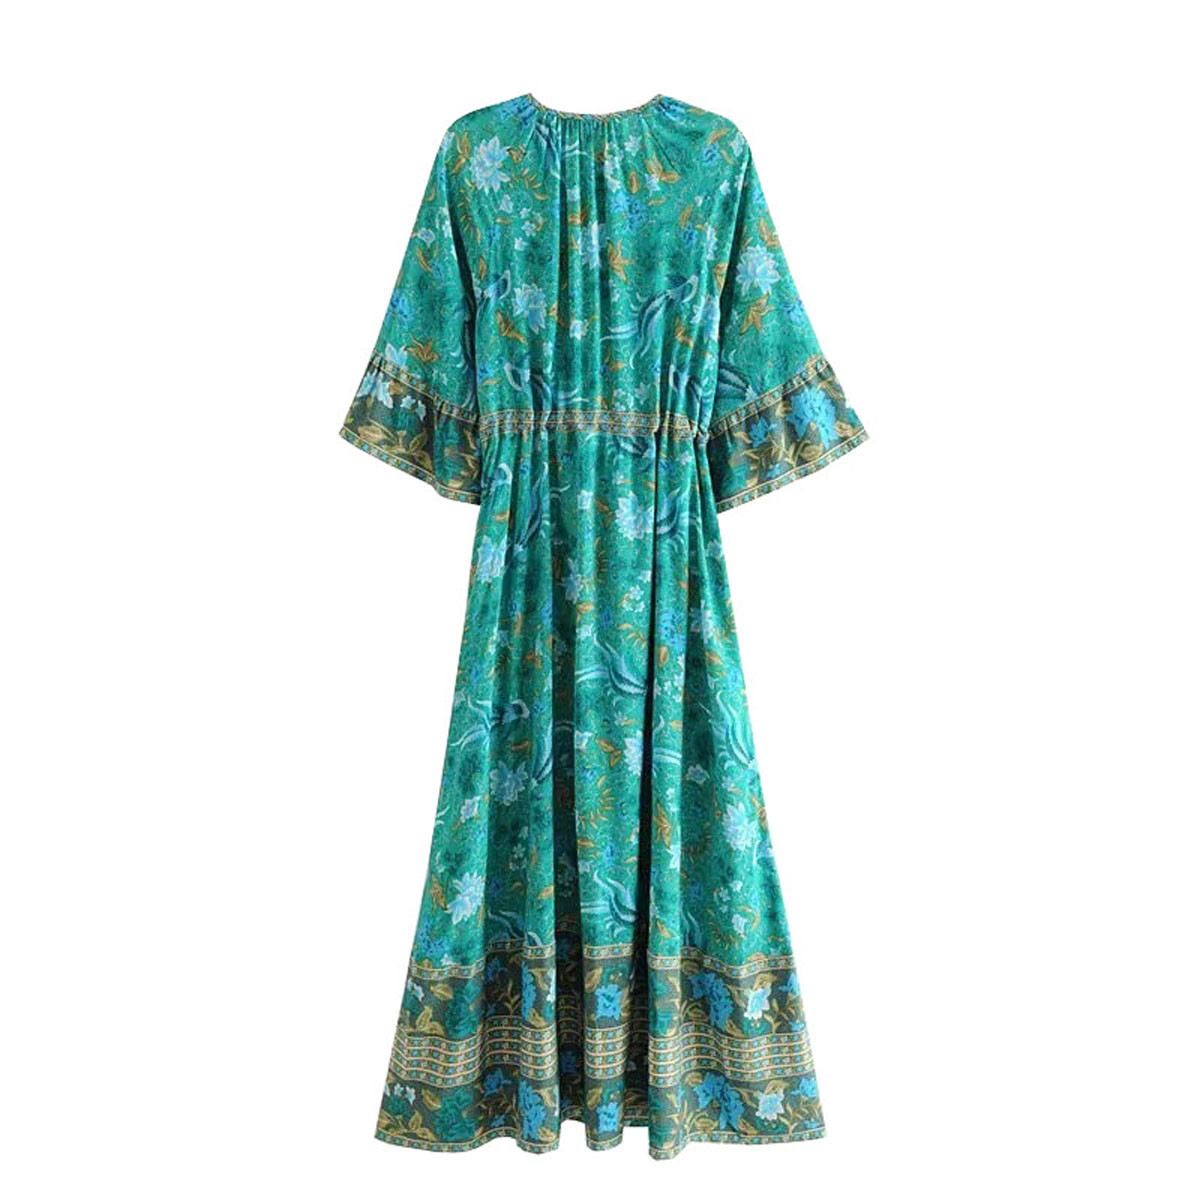 US$ 26.99 - R.Vivimos Women's Summer Cotton Vintage Floral Half Sleeve ...